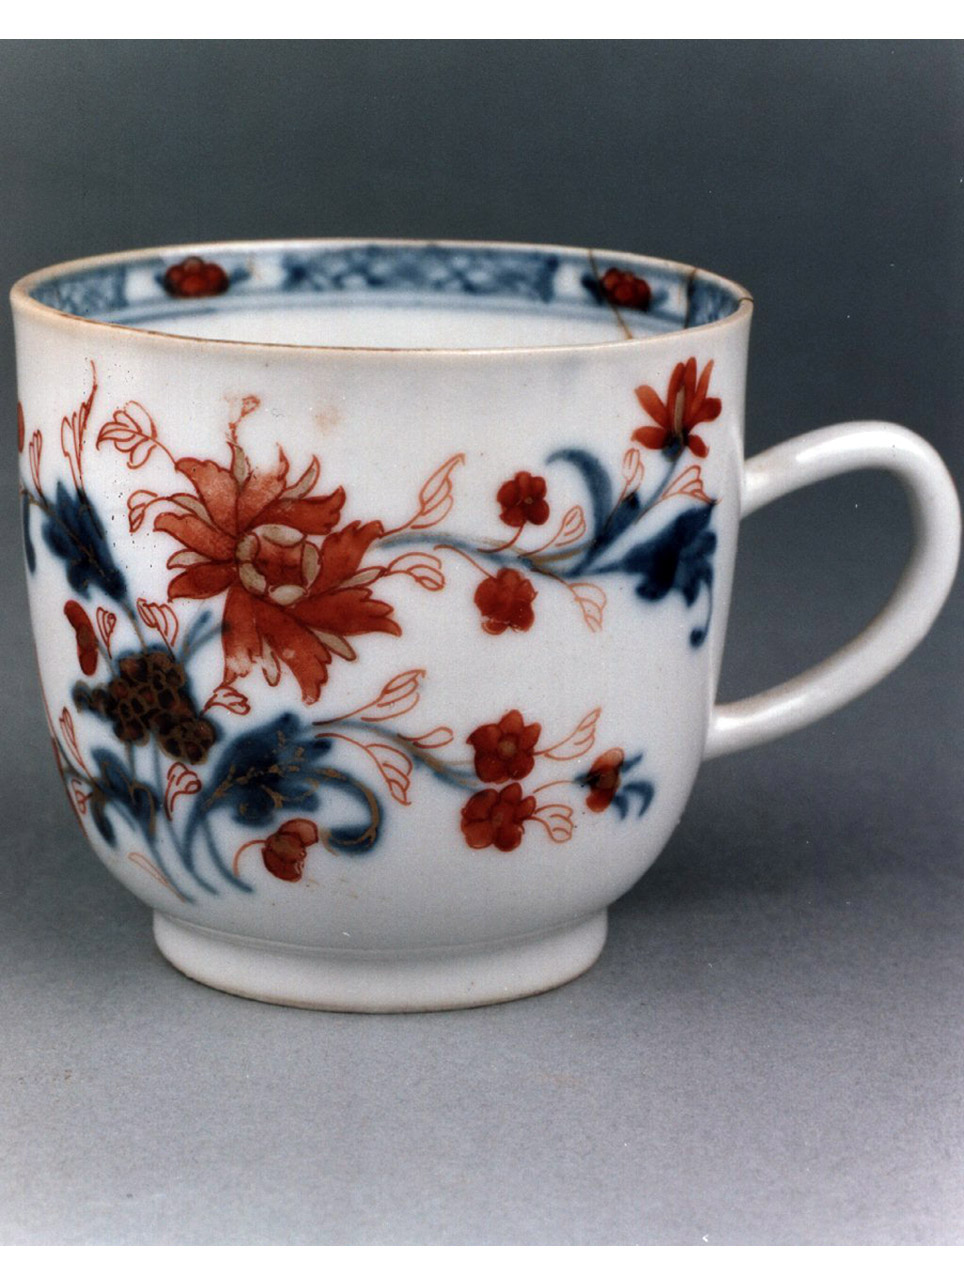 motivi decorativi floreali (tazzina) - manifattura di Jingdezhen (primo quarto sec. XVIII)